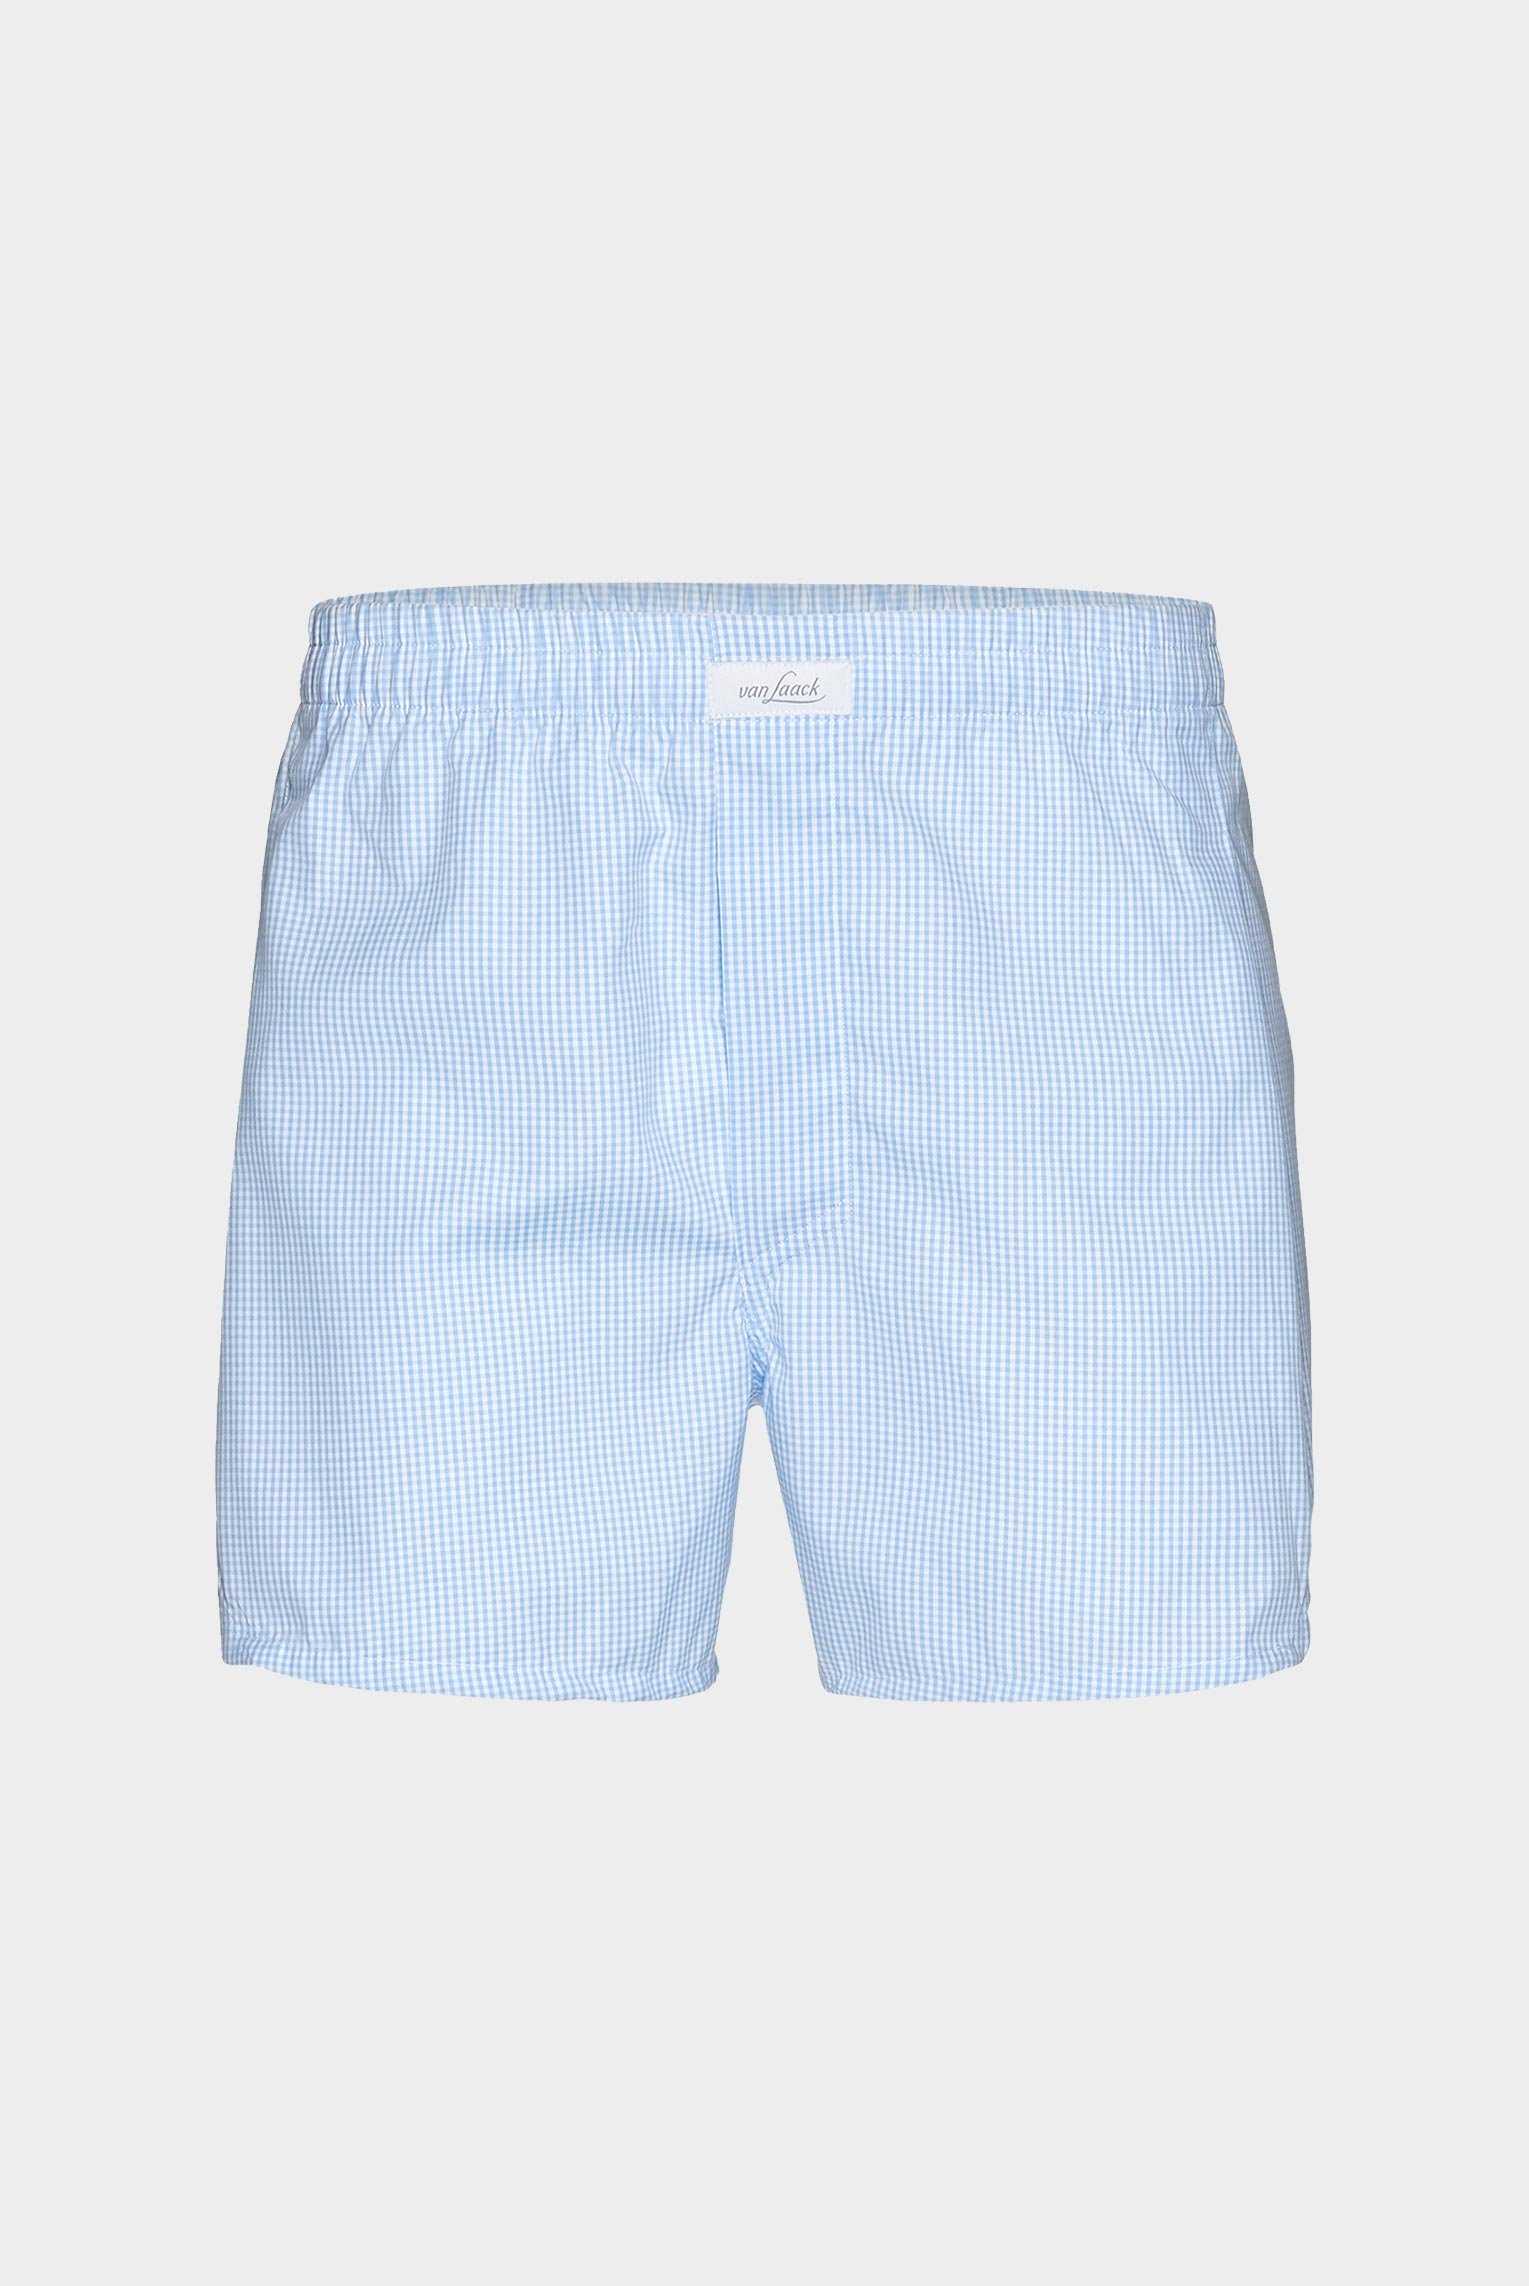 Underwear+Small Gingham Checked Poplin Boxer Shorts+91.1100.V4.141787.720.48